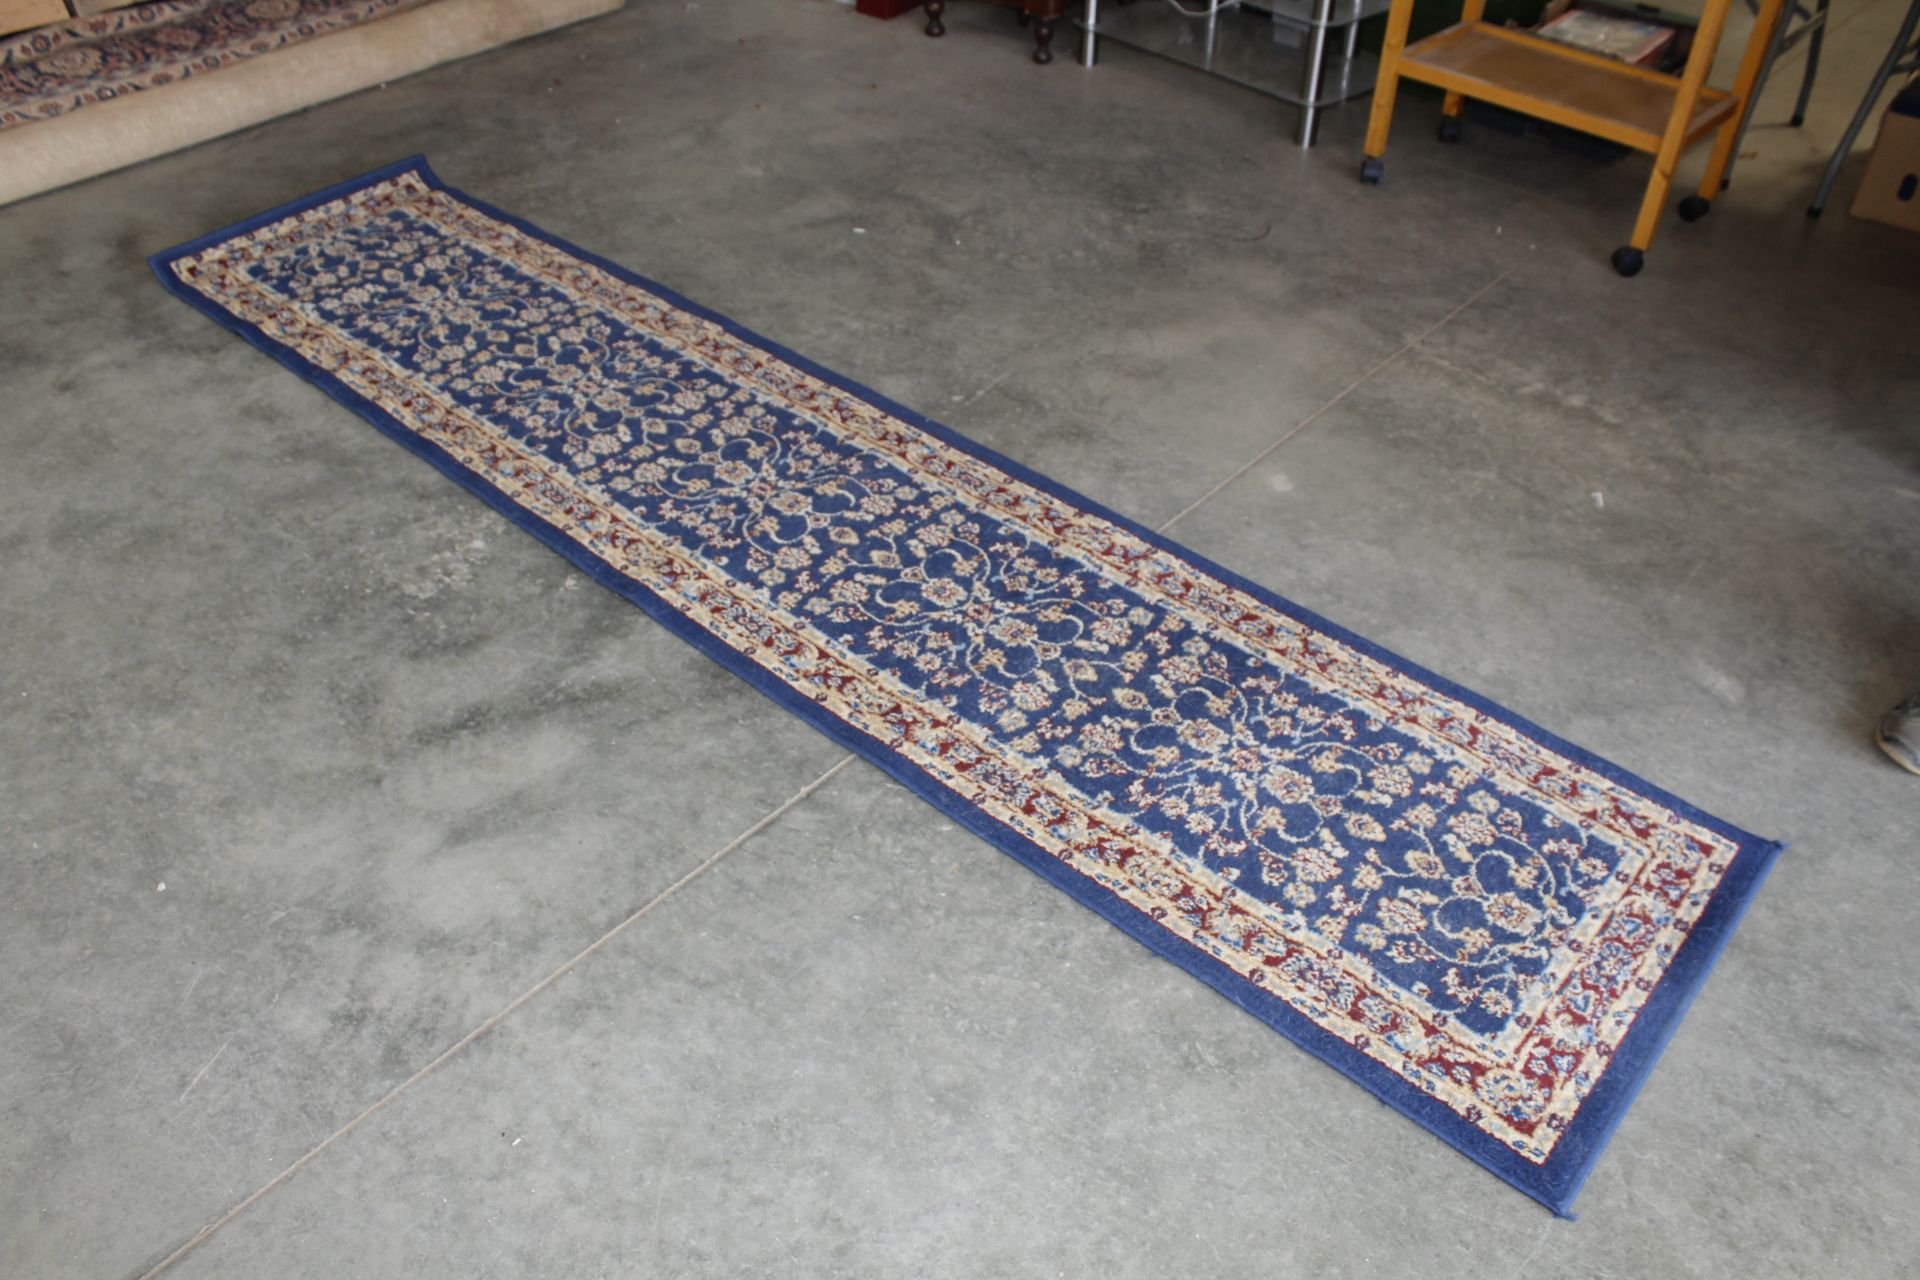 An approx. 9'11" x 2'2" blue pattern rug